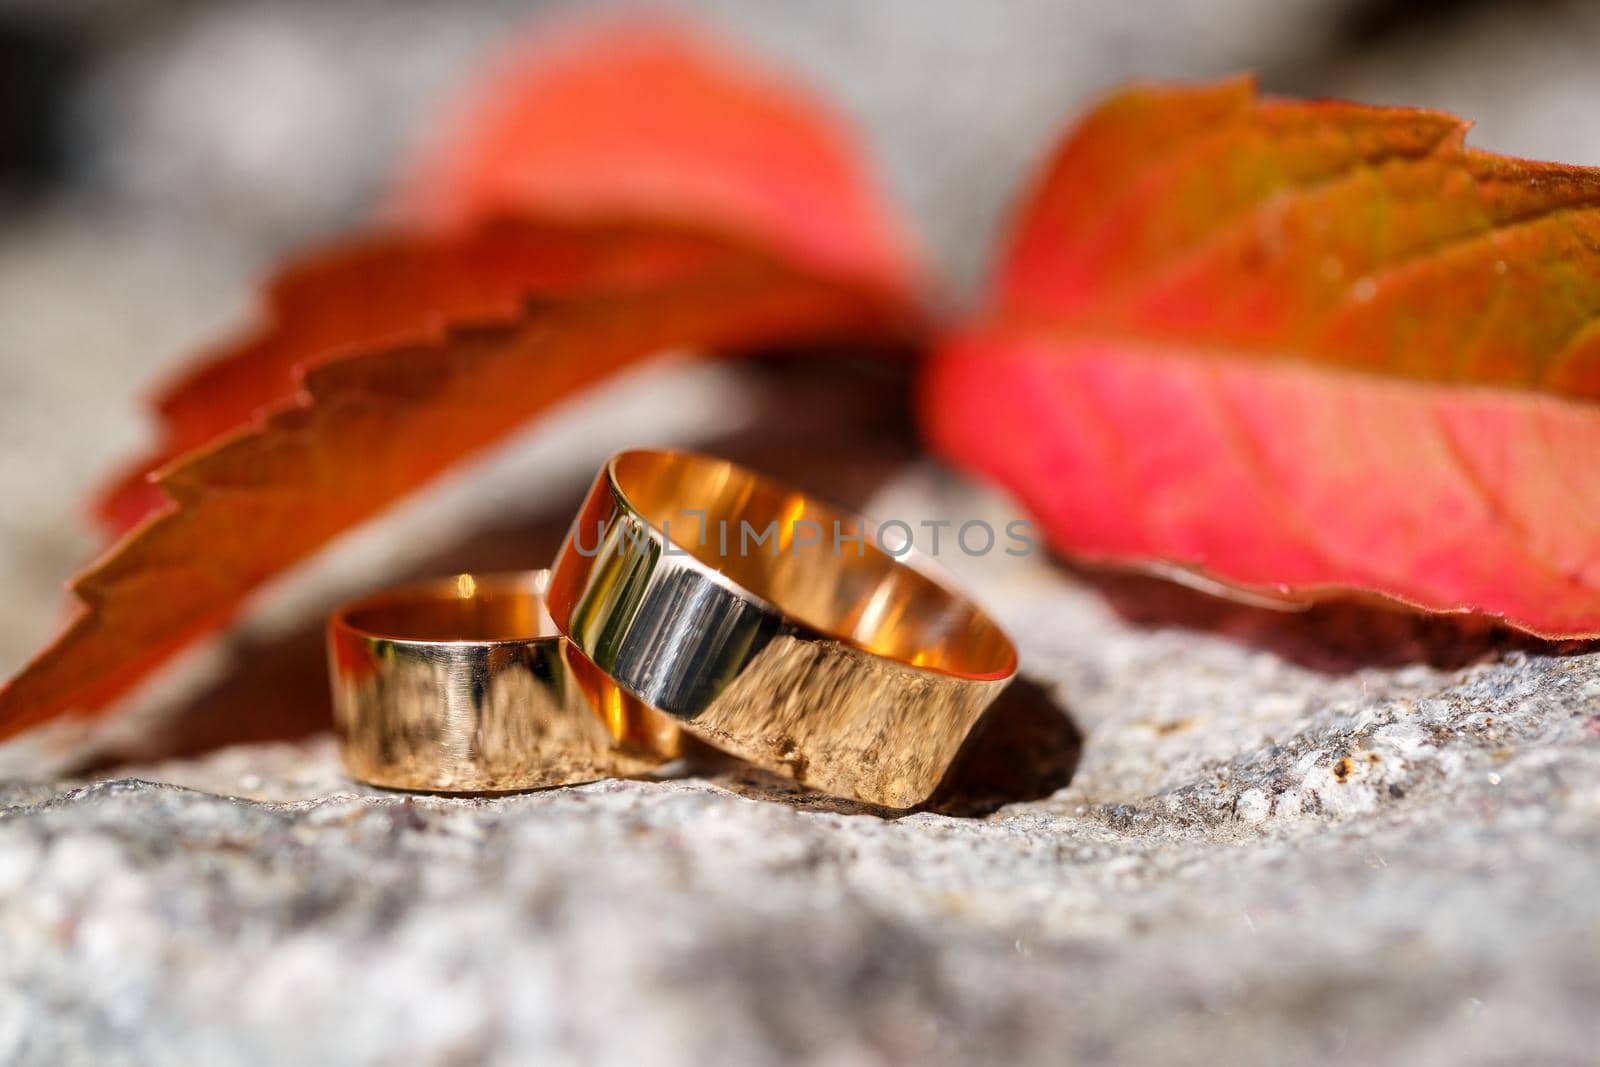 gold wedding rings for newlyweds on their wedding day by Dmitrytph